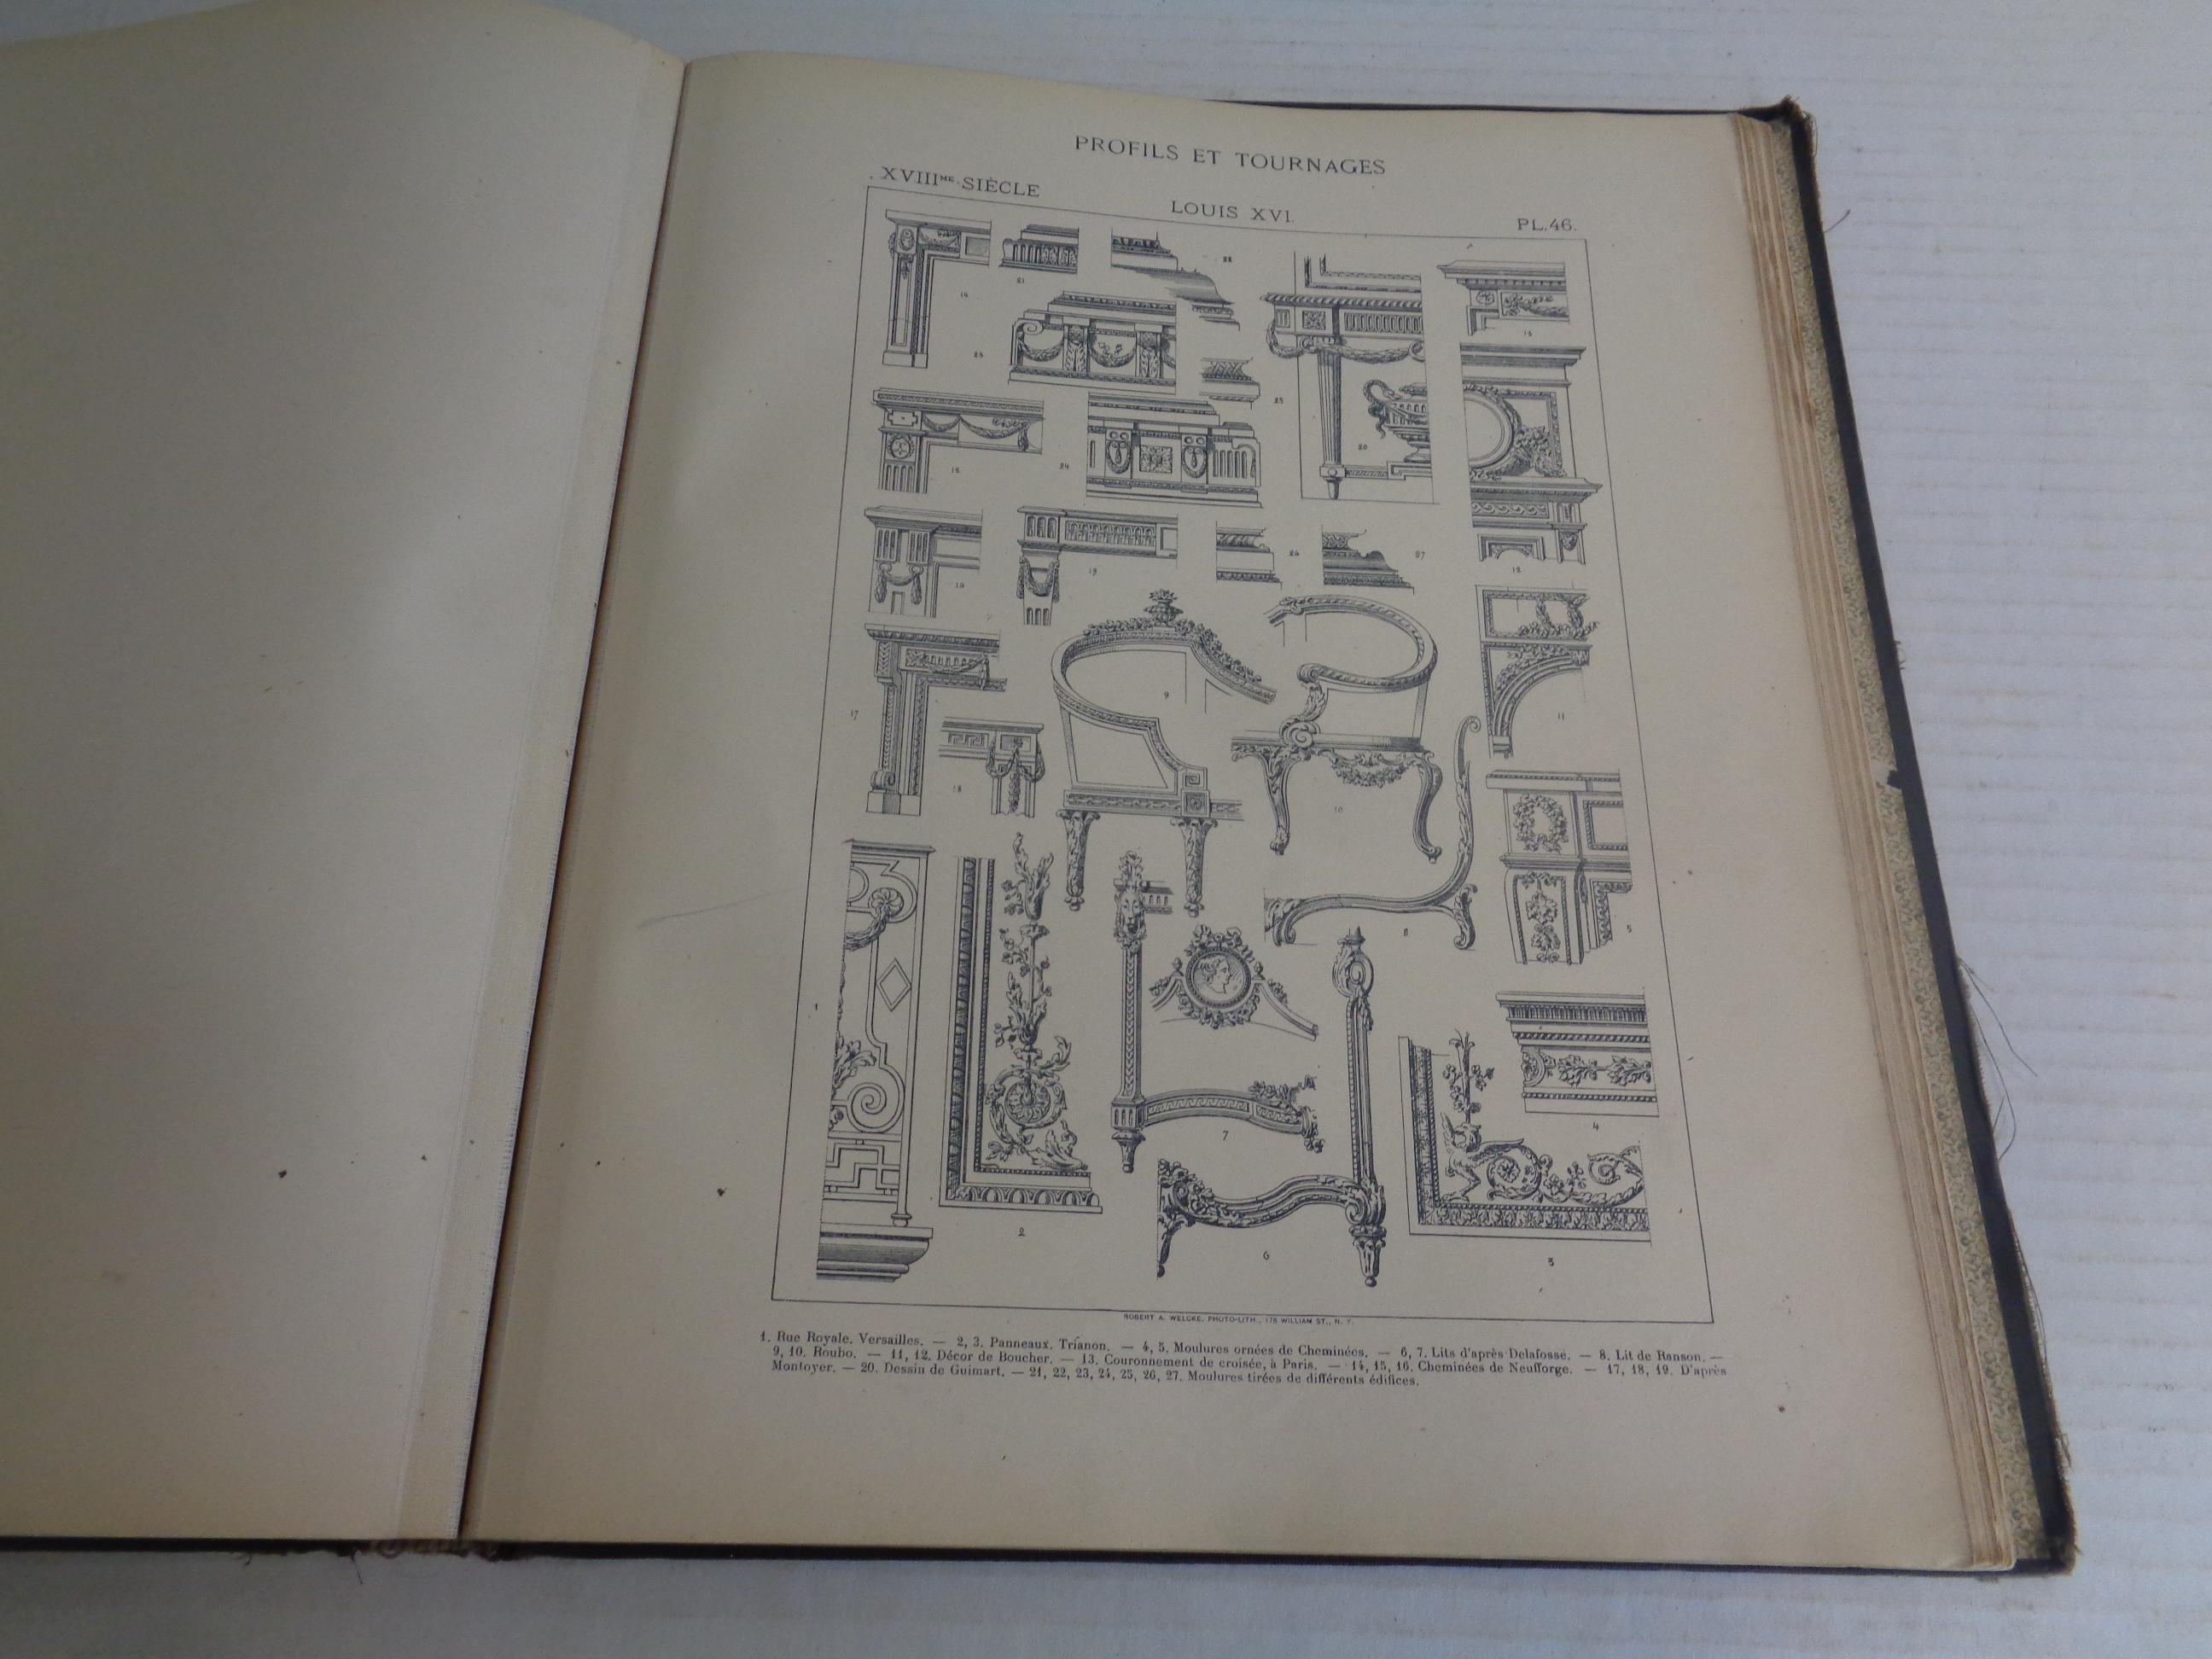  FRENCH STYLES: Furniture & Architecture - Bajot, Paris - 19th C. Folio Book For Sale 7